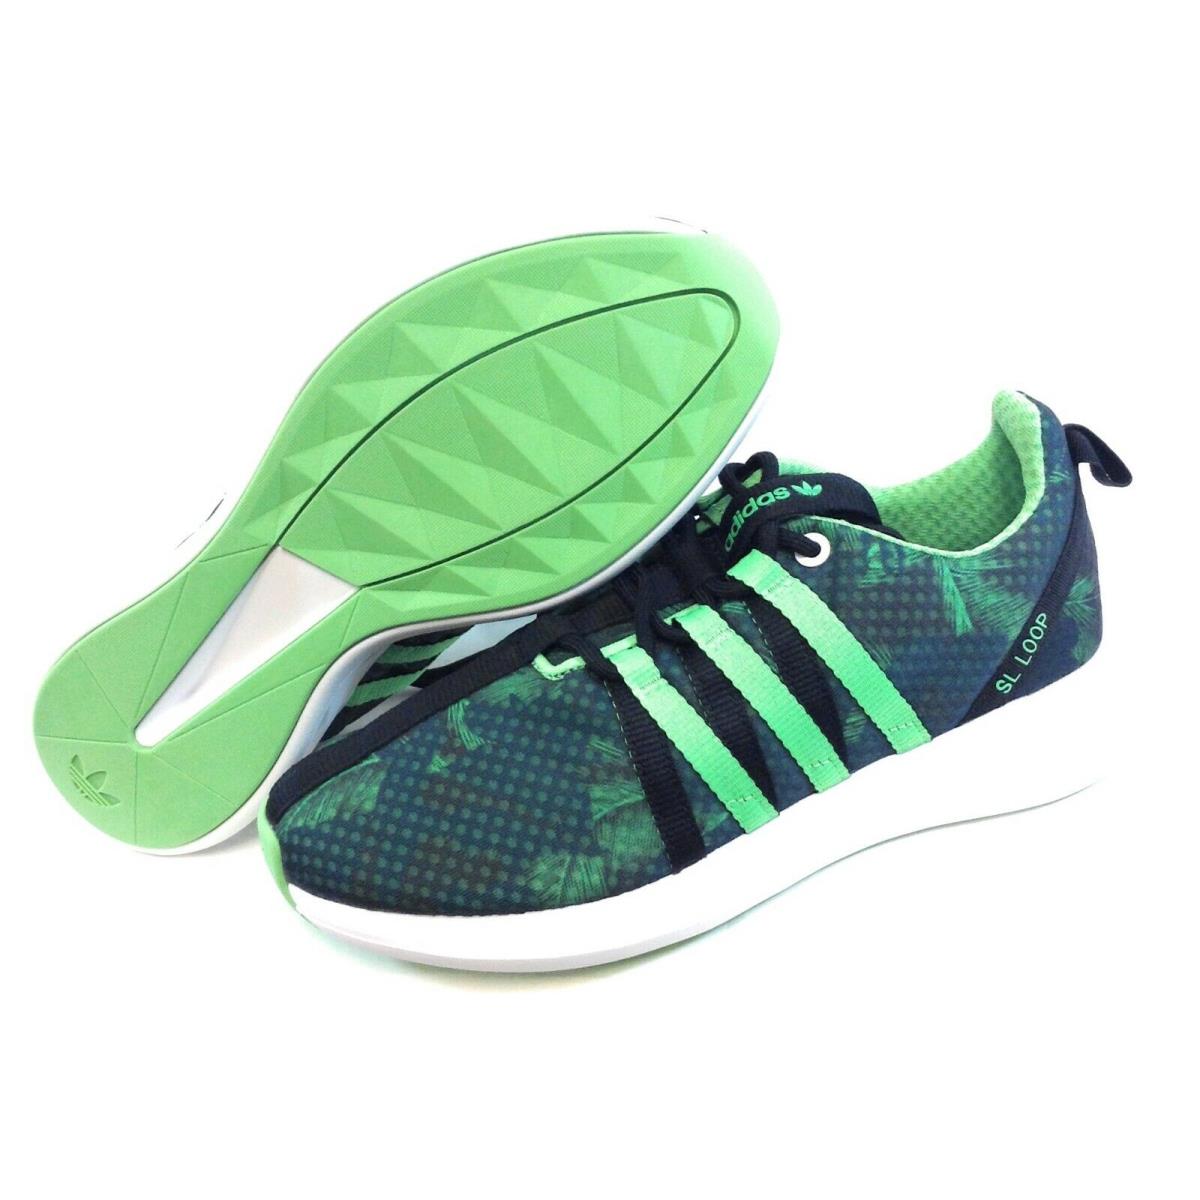 Womens Adidas SL Loop Racer C77537 Green Black 2015 Deadstock Sneakers Shoes - Green